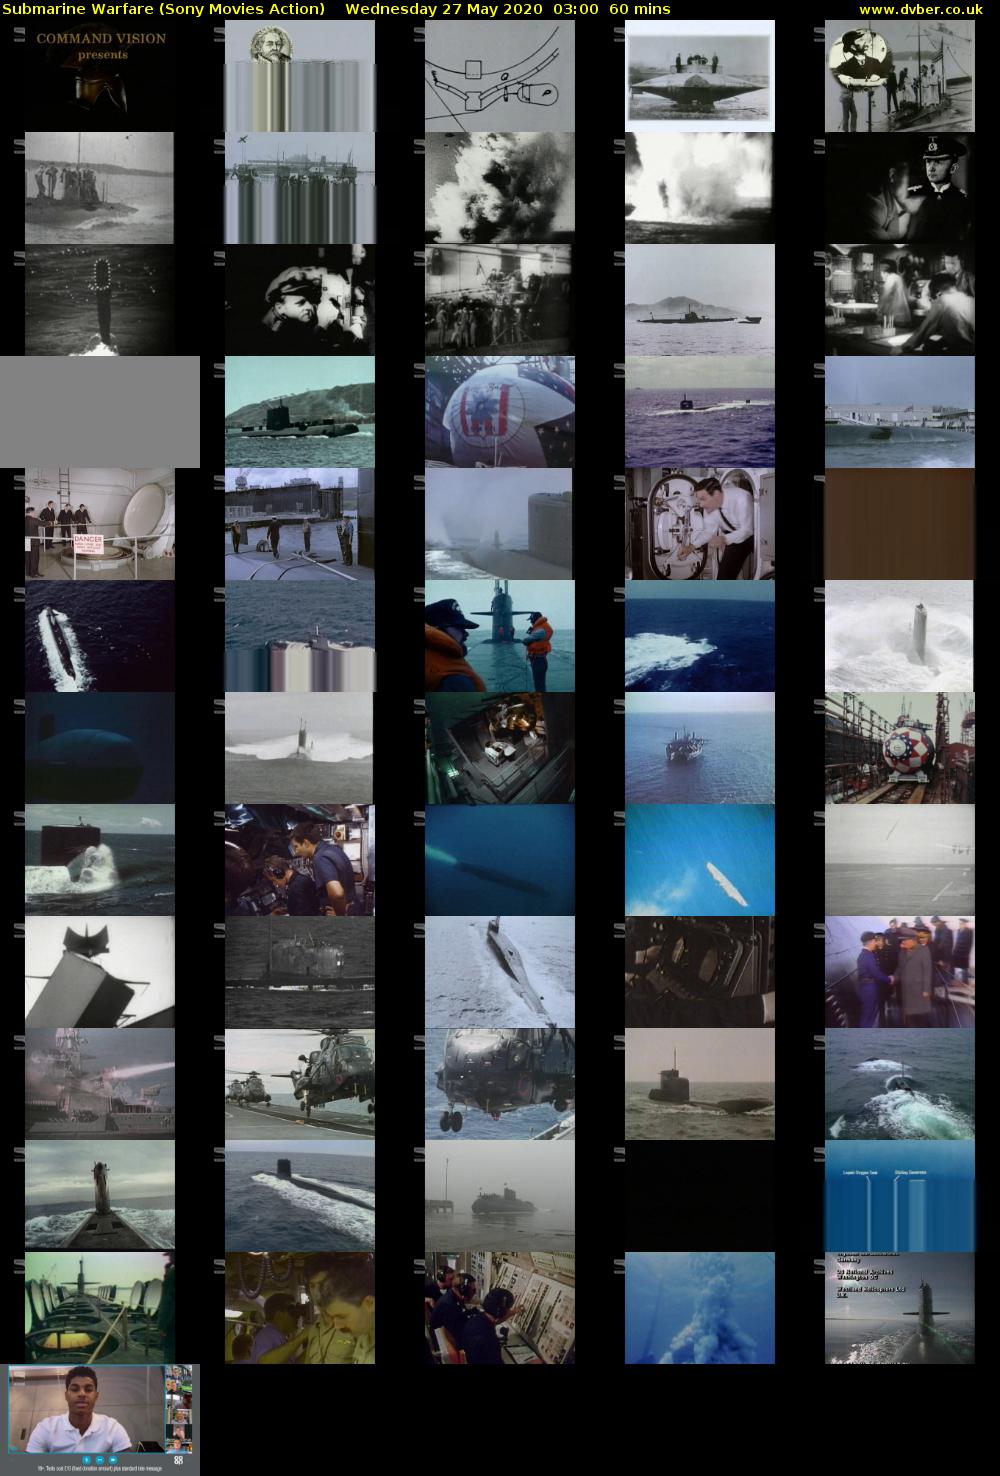 Submarine Warfare (Sony Movies Action) Wednesday 27 May 2020 03:00 - 04:00